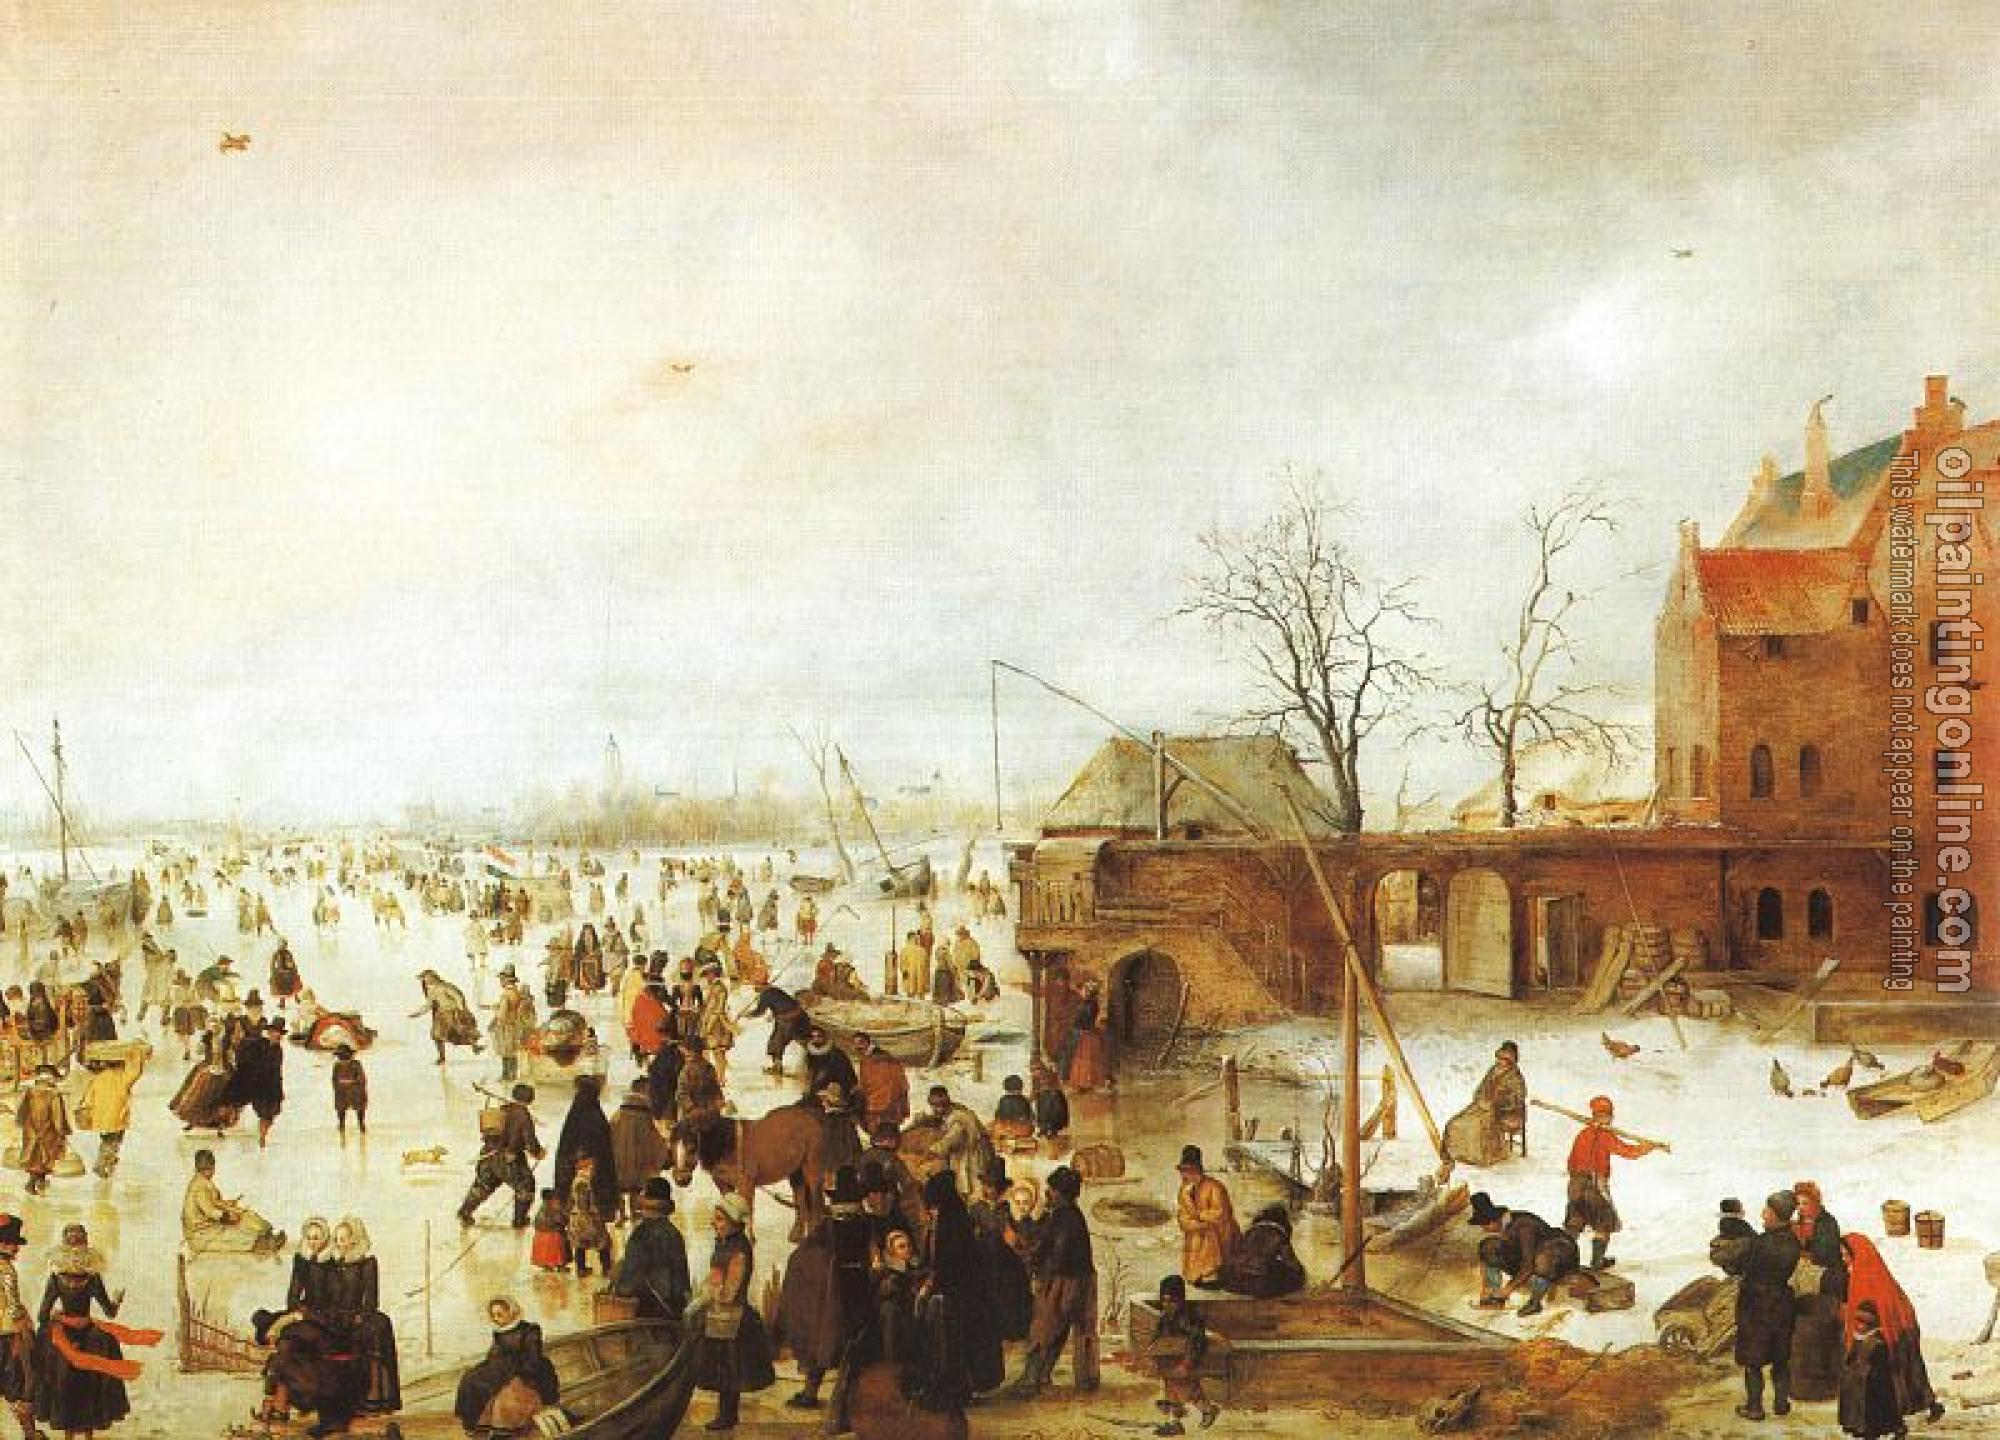 Avercamp, Hendrick - Graphic A Scene on the Ice near a Town